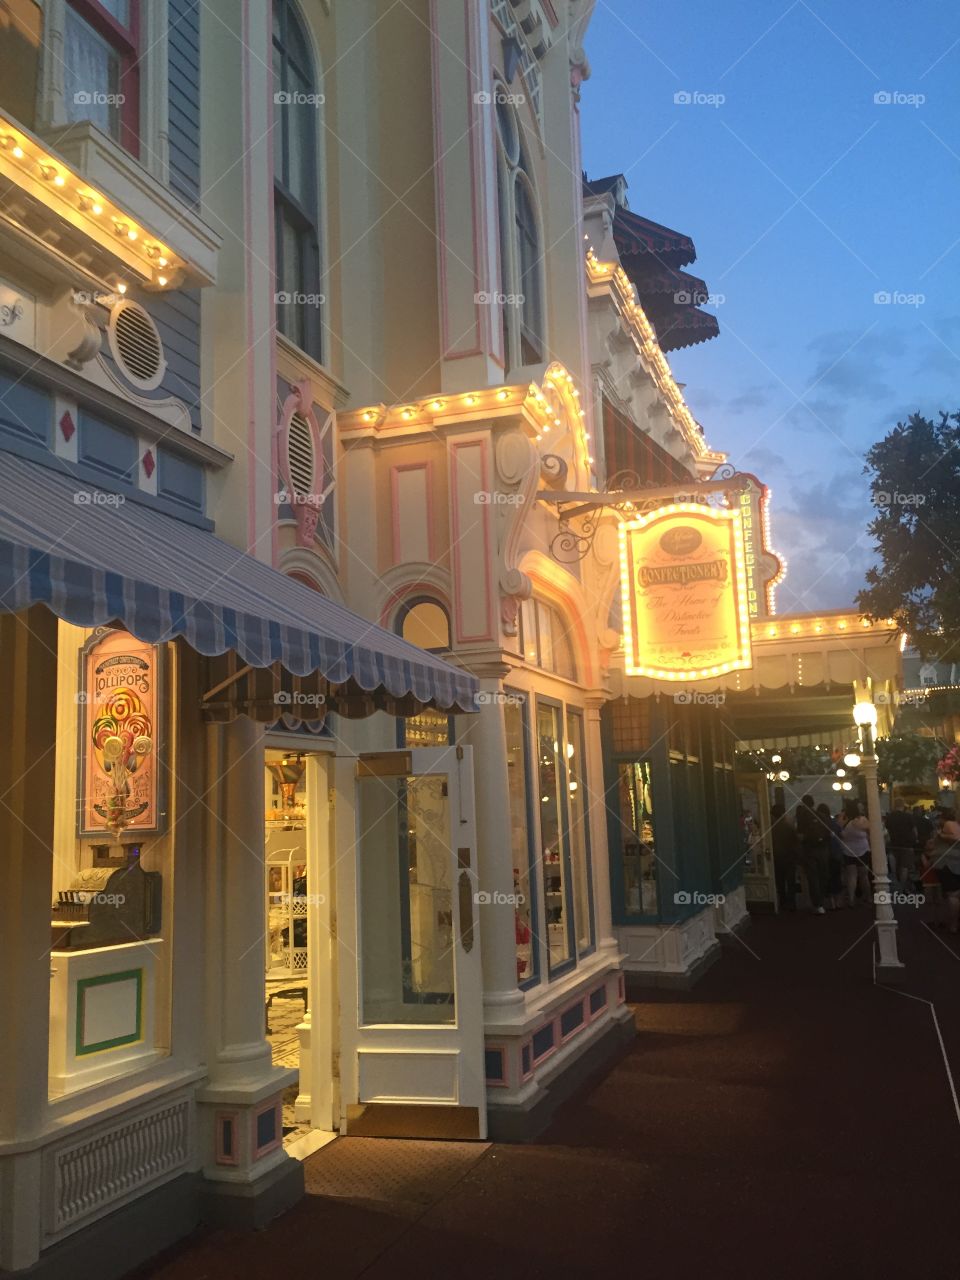 Disney shops 